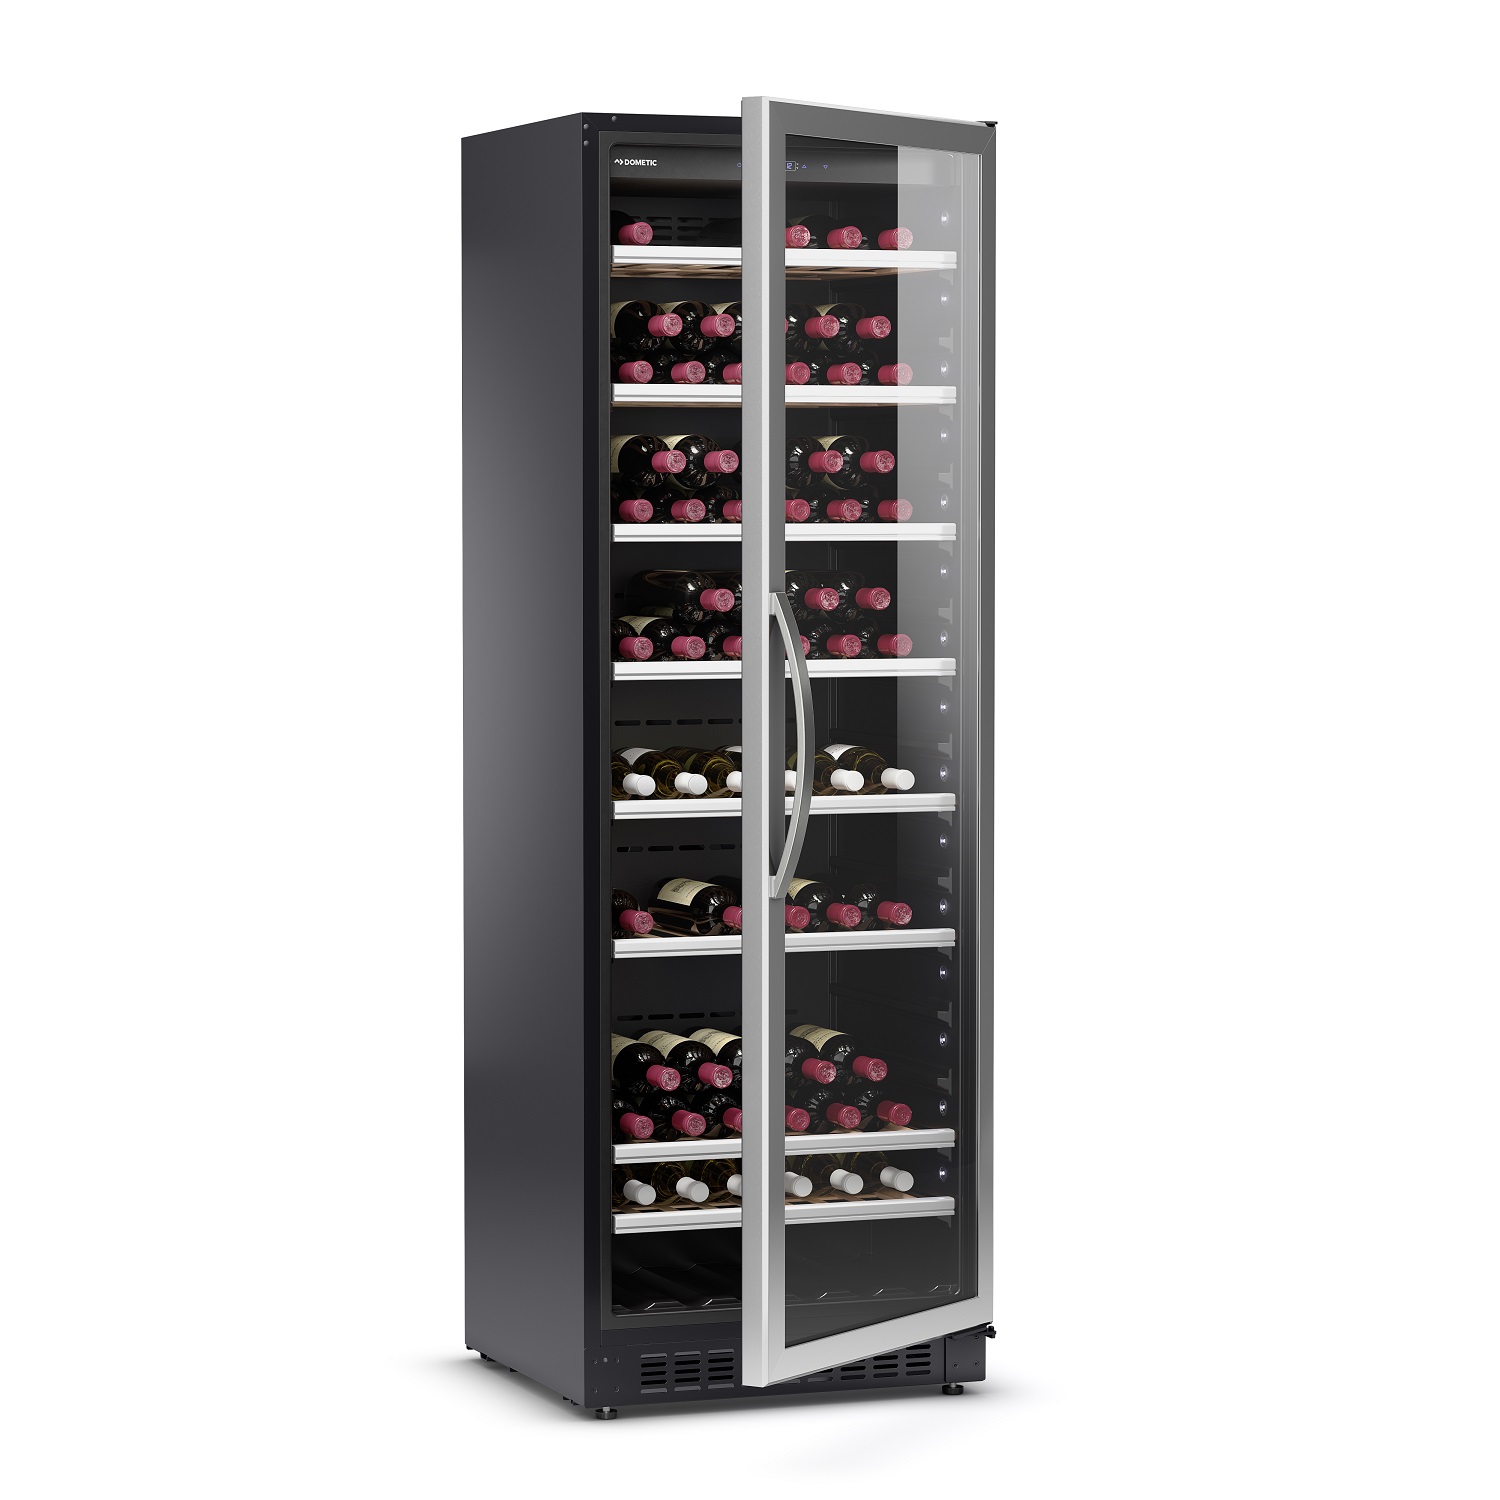 Dometic wine fridge range